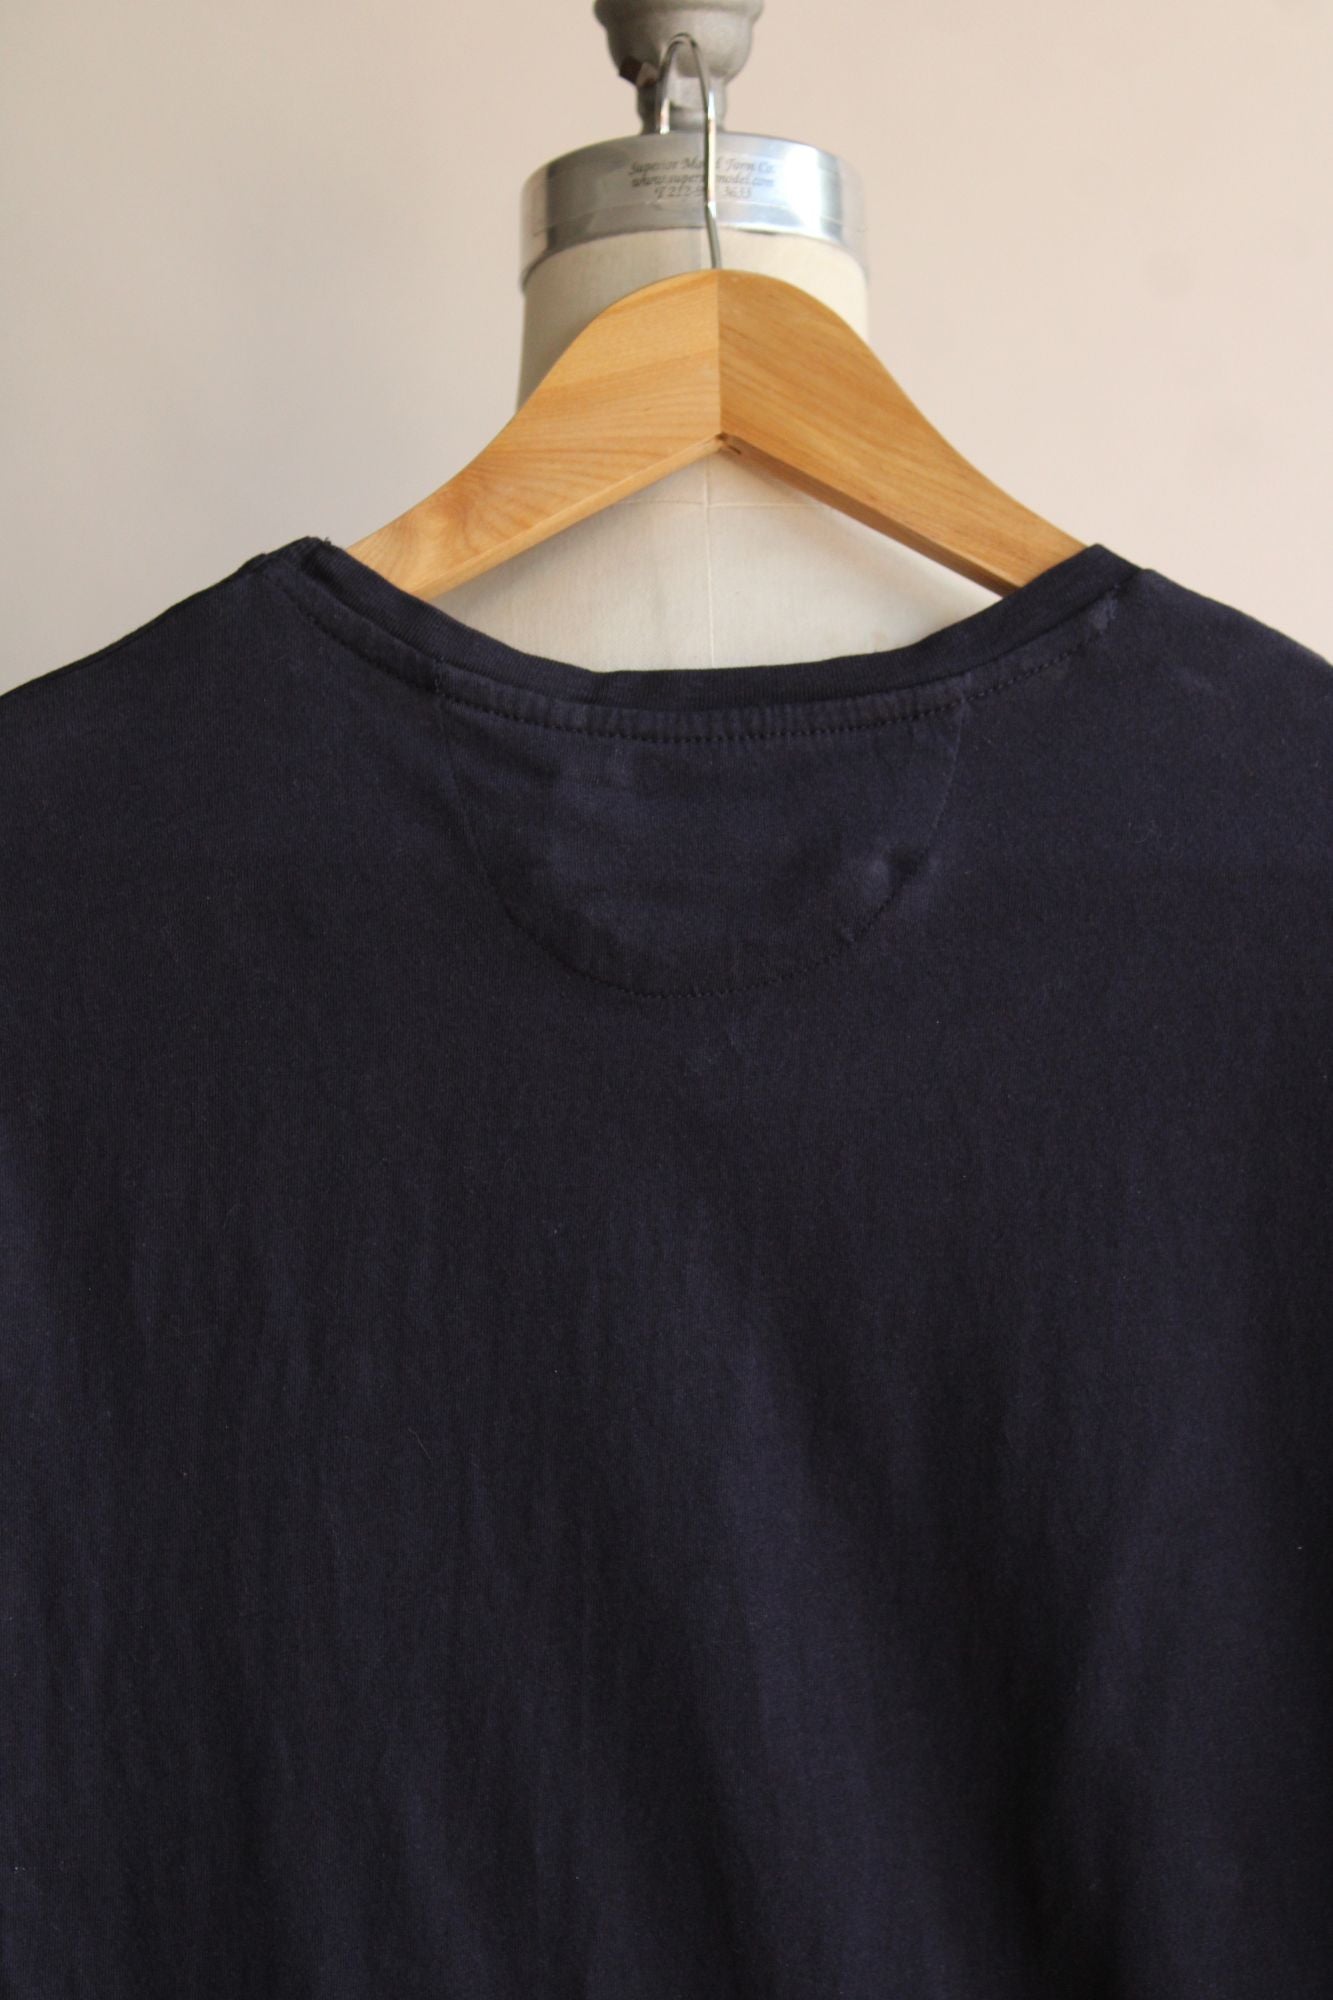 Zara Essentials mens t shirt, size small, navy blue, v neck